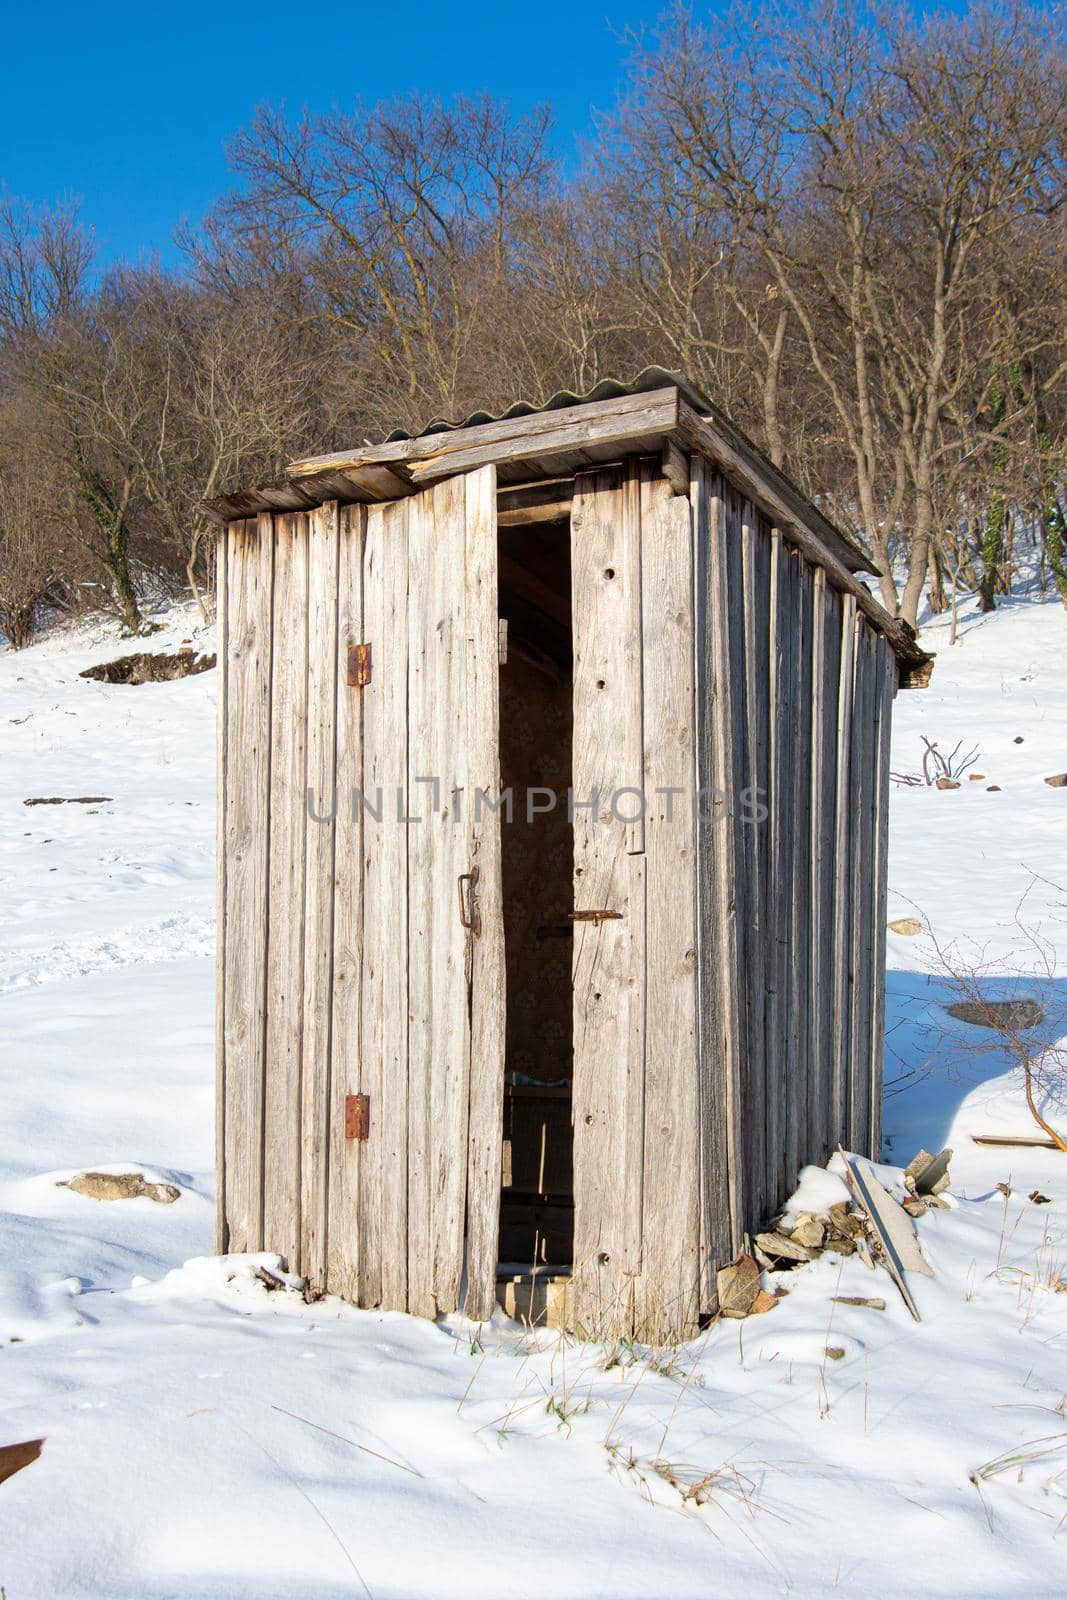 Old wooden outdoor toilet in winter weather